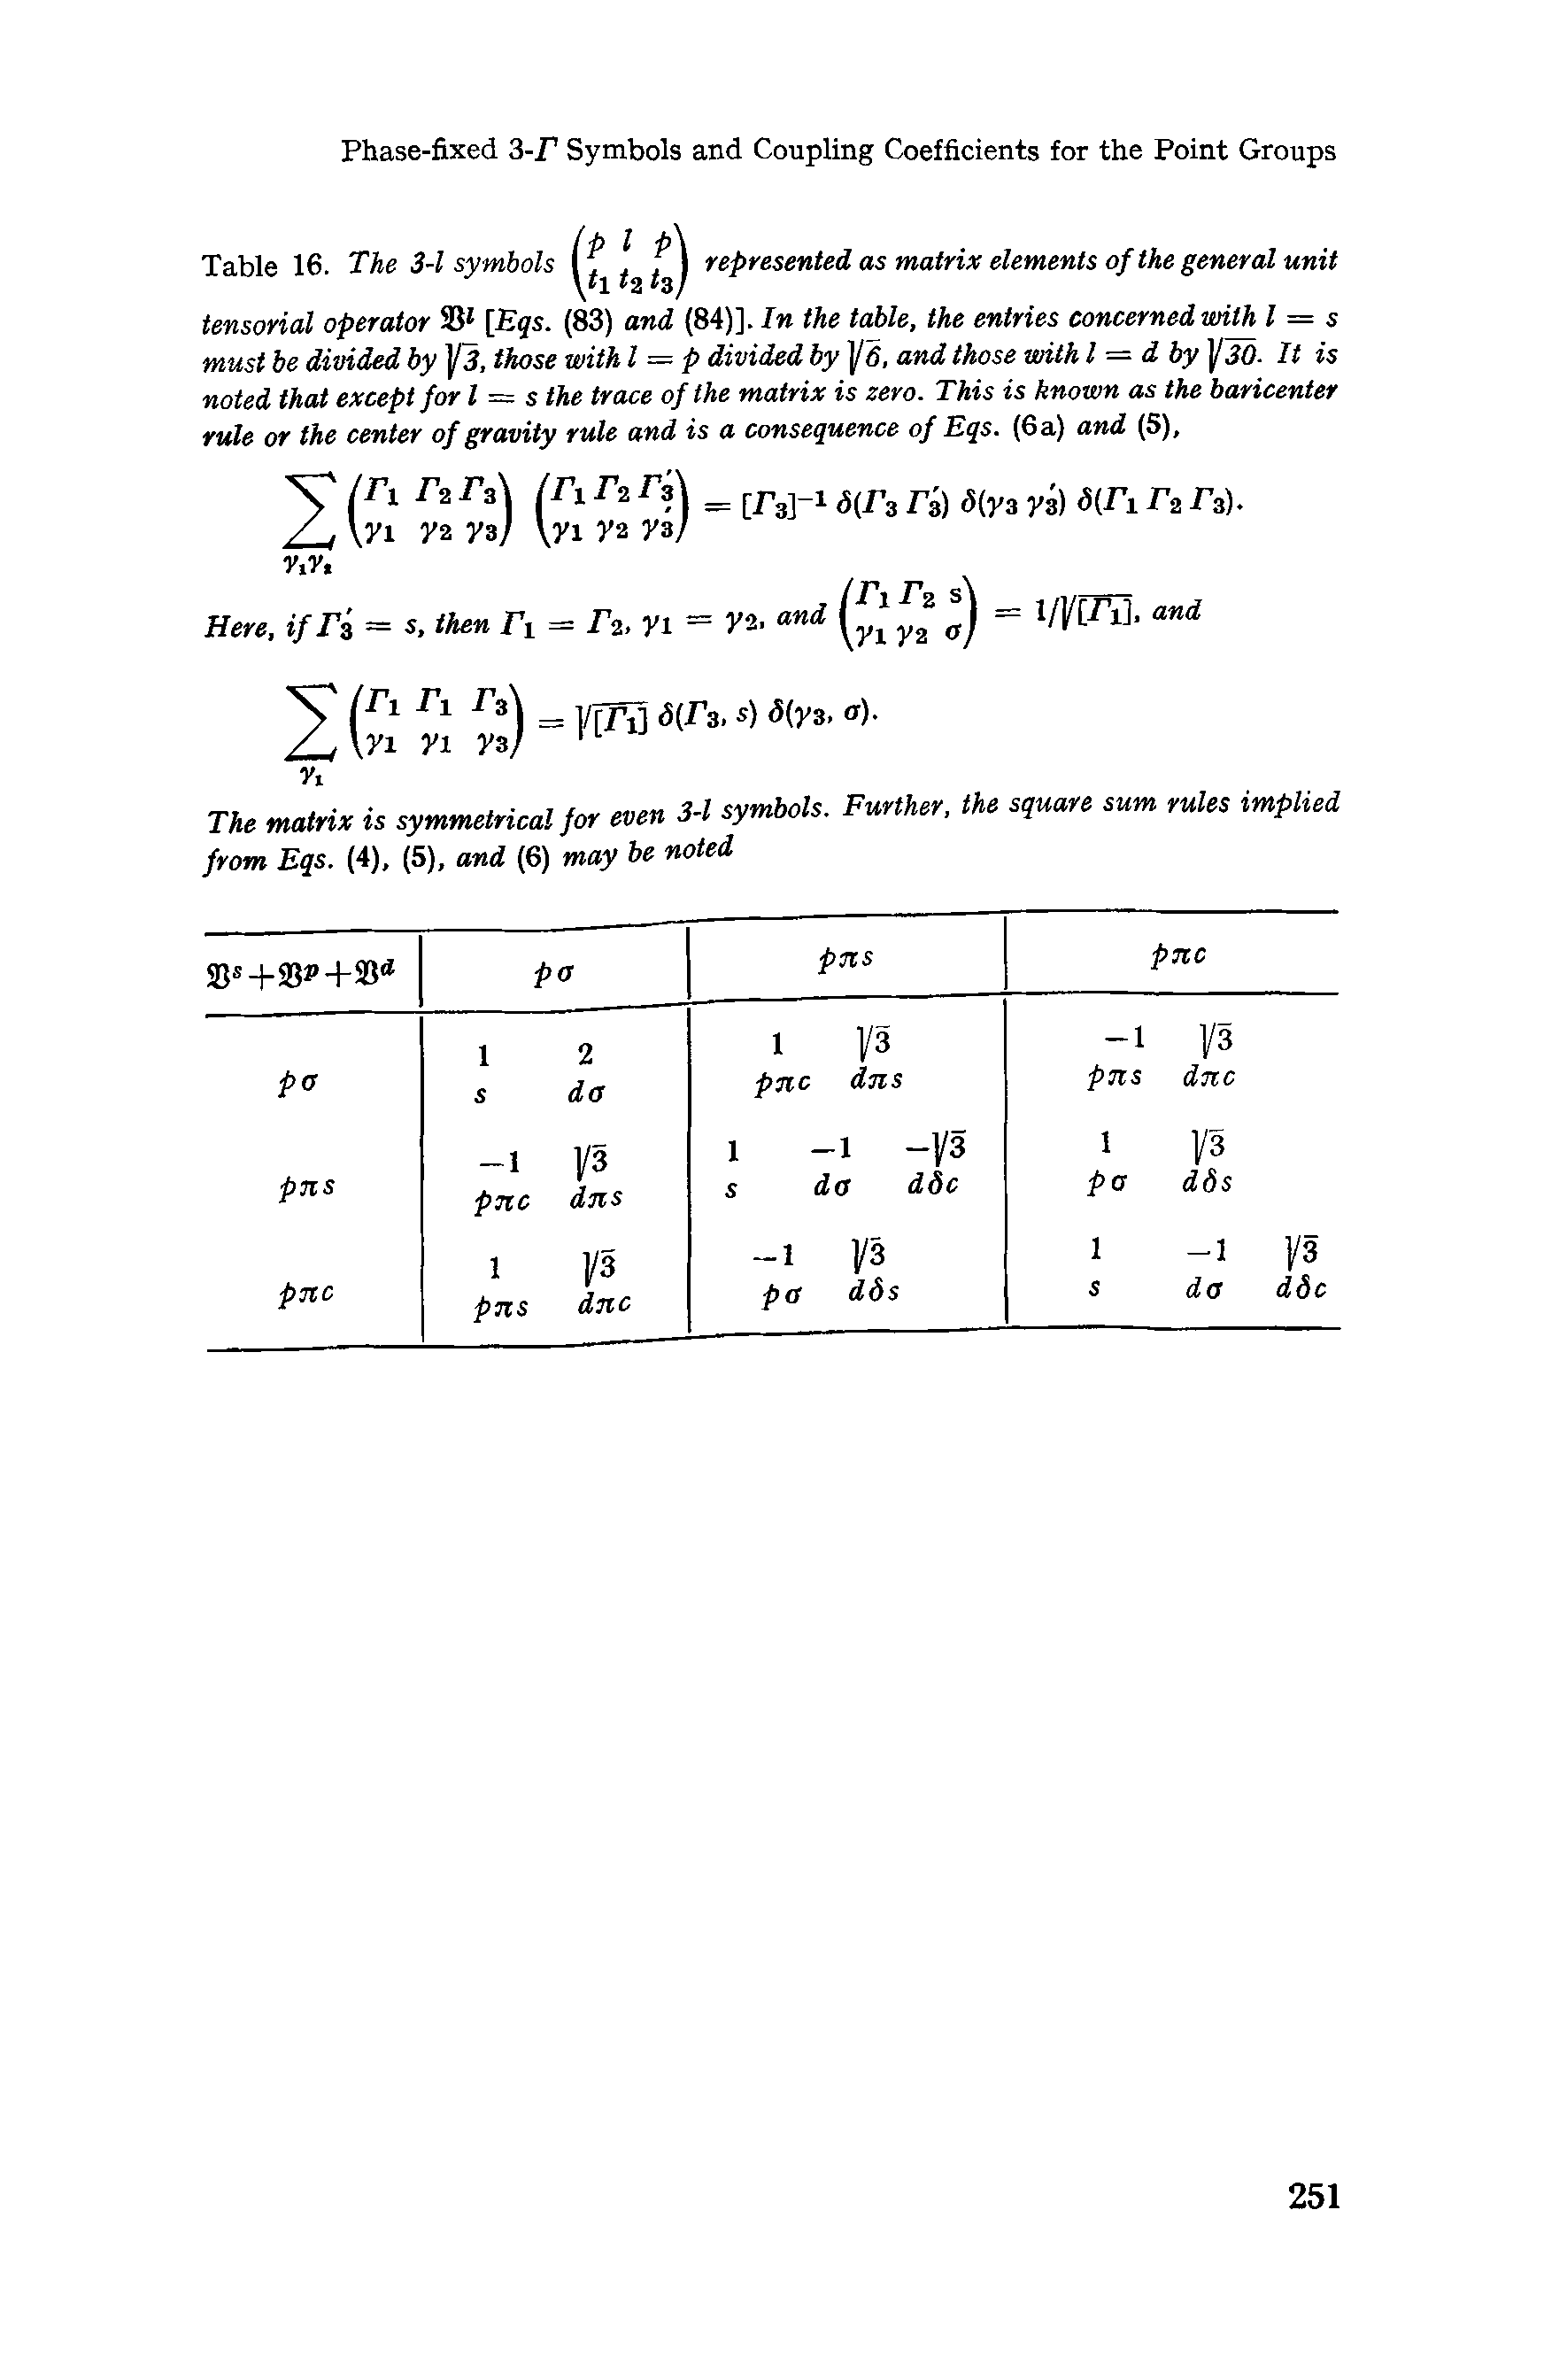 Table 16. The 3-1 symbols j represented as matrix elements of the general unit...